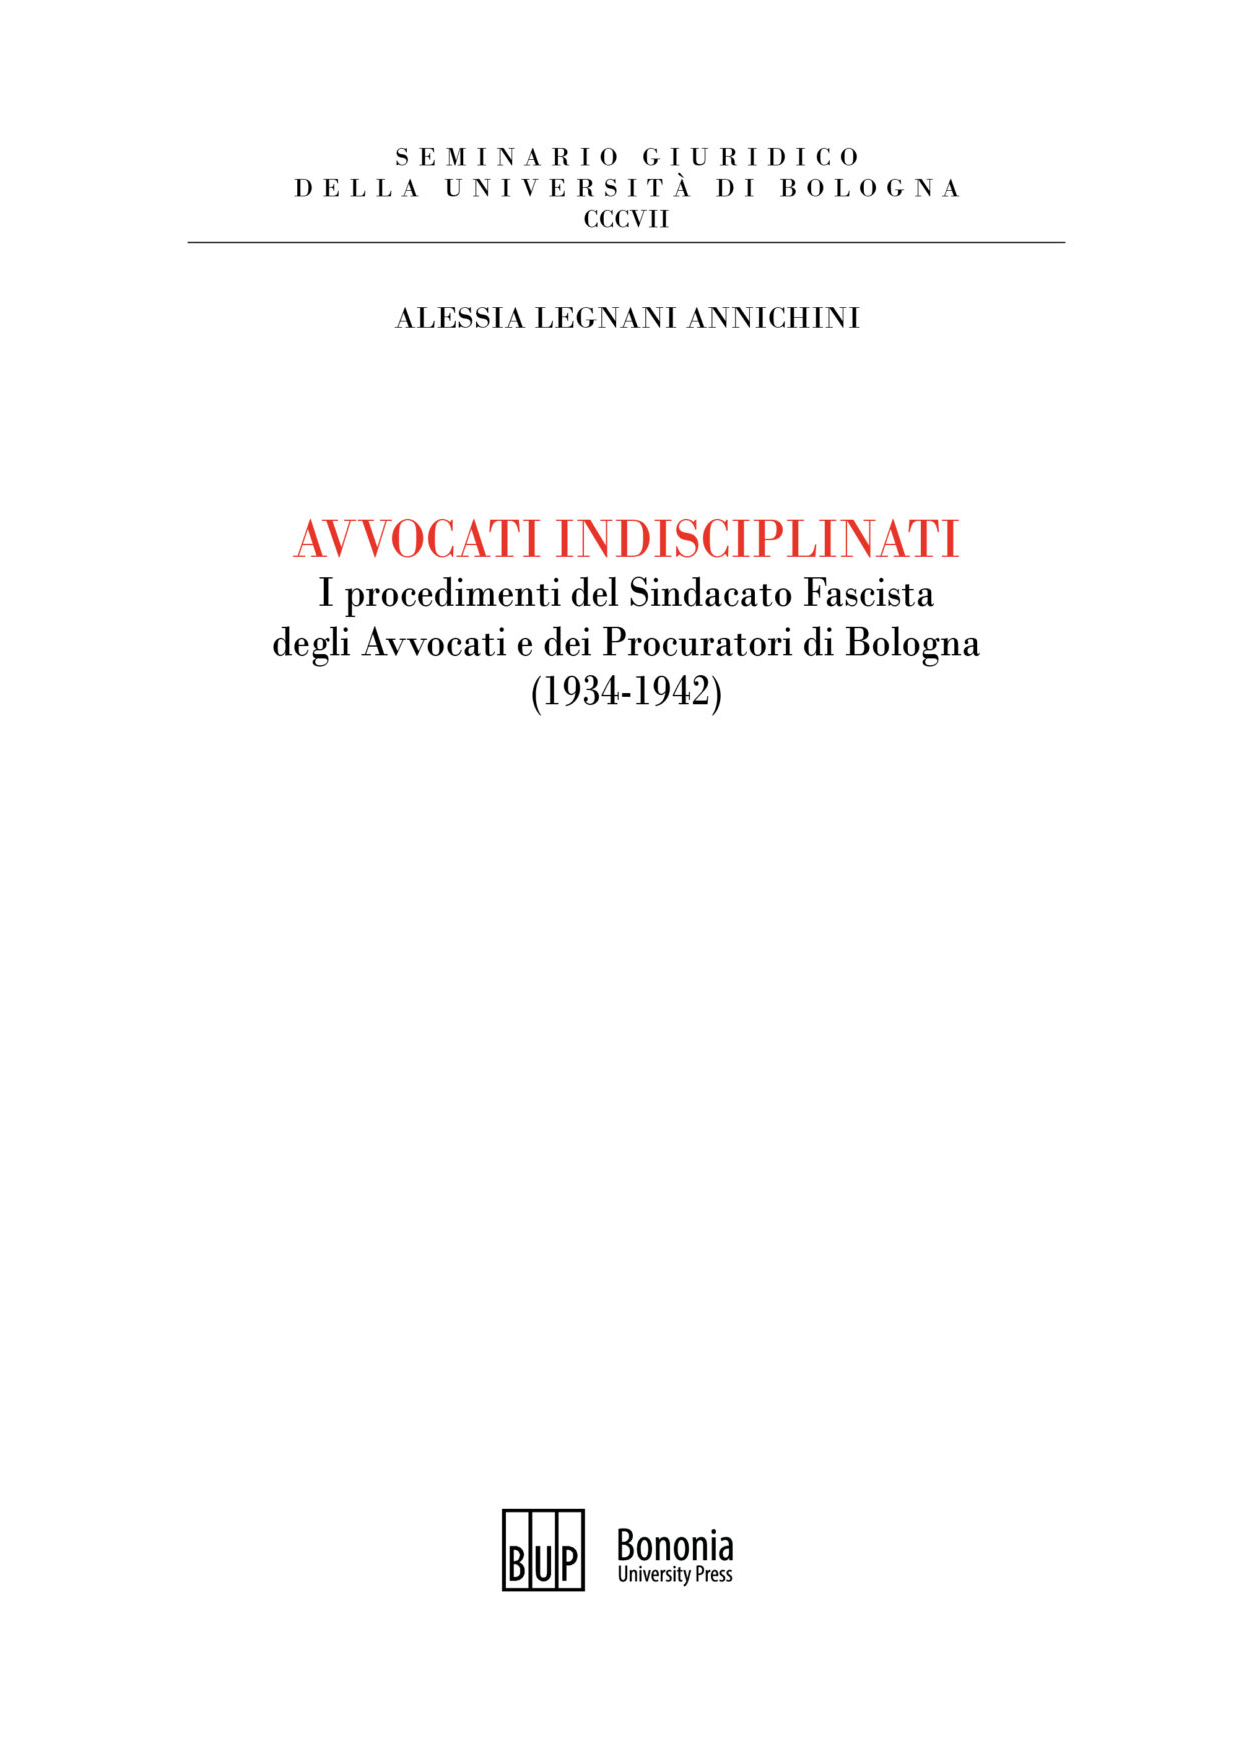 Avvocati indisciplinati - Bologna University Press